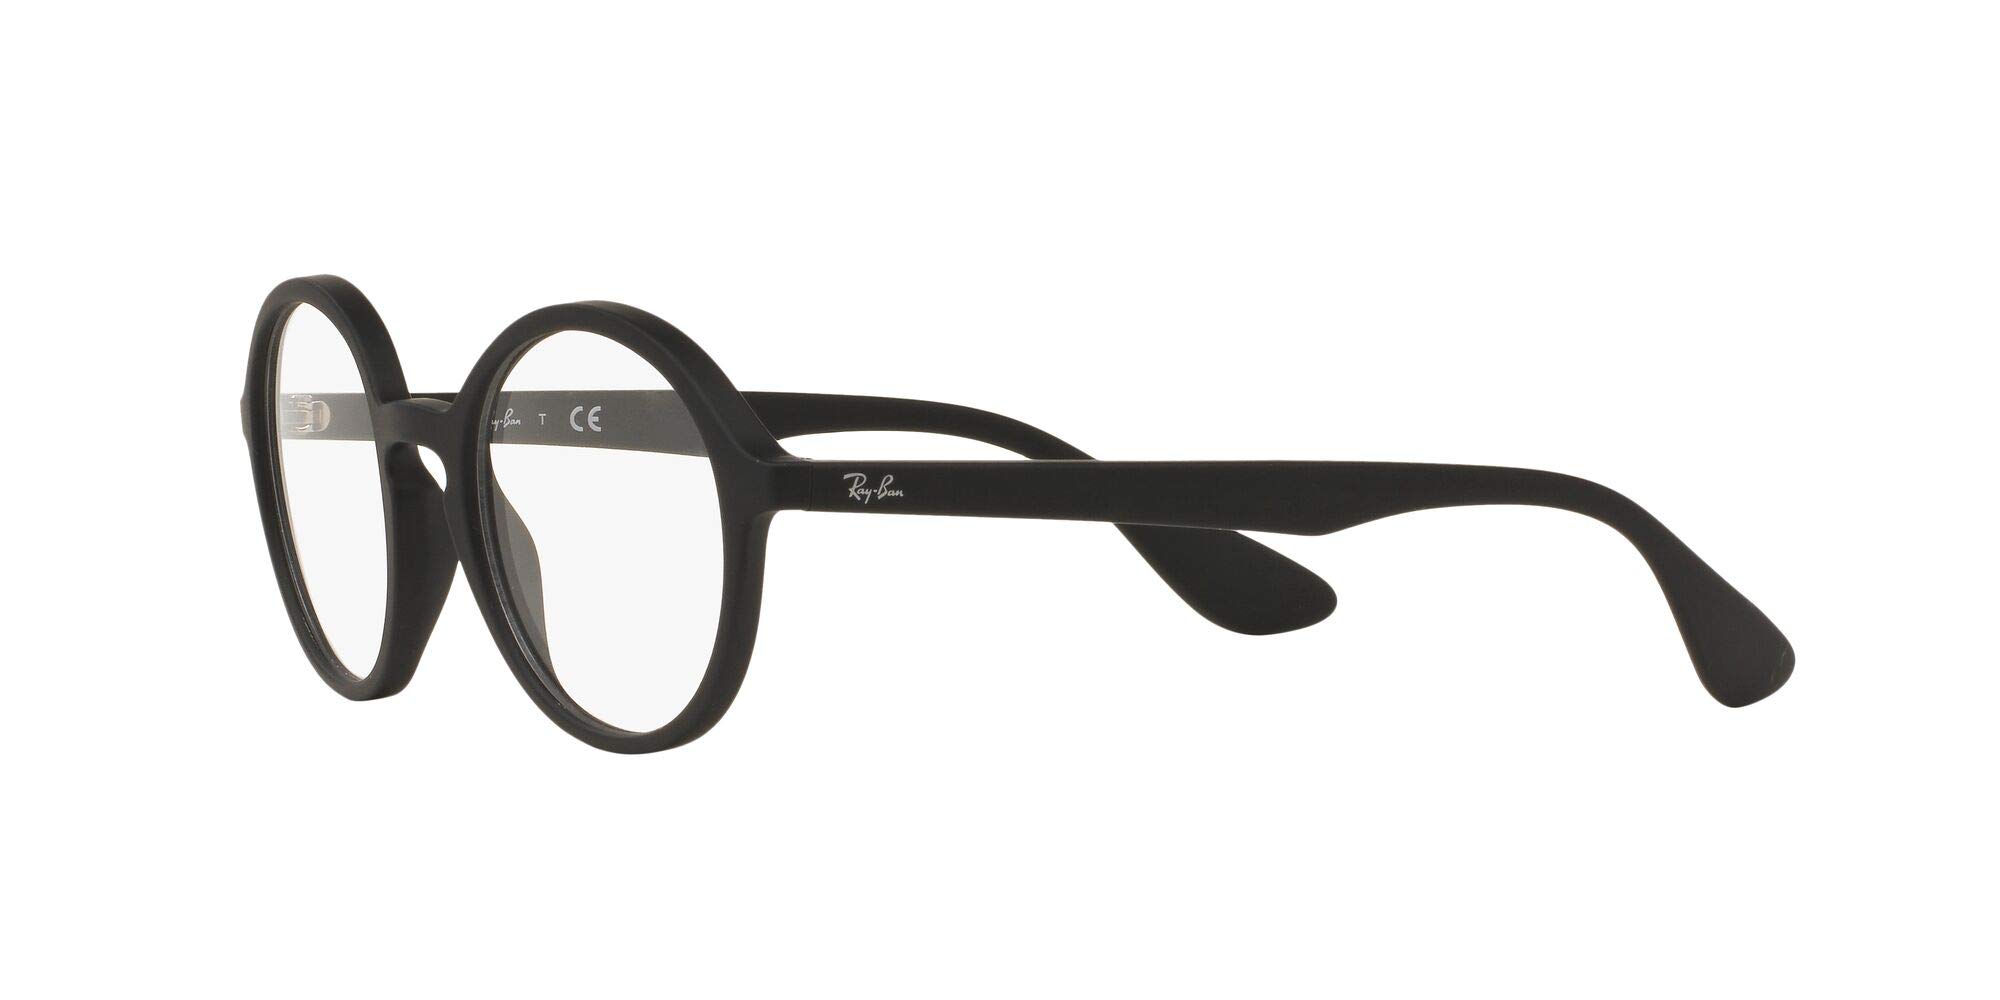 Ray-Ban RX7075 Round Prescription Eyeglass Frames